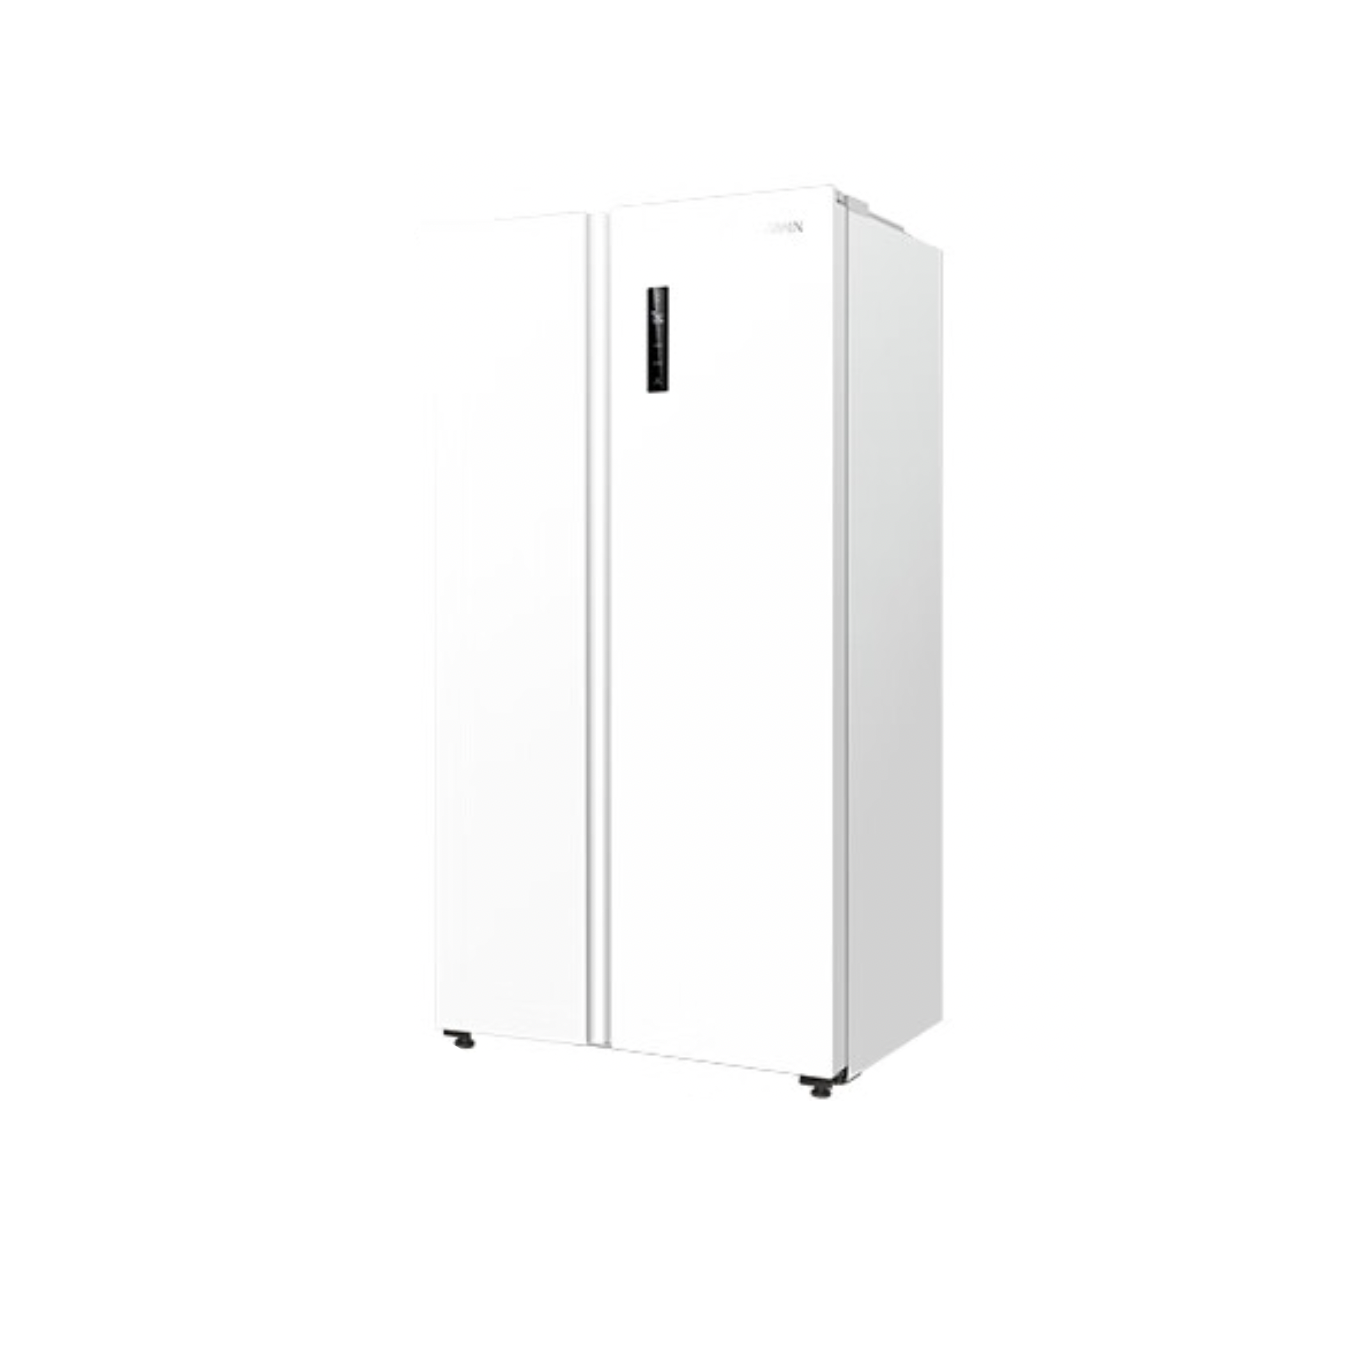 WAHIN 华凌 HR-610WKPZH1 风冷对开门冰箱 610L 极地白 1470.56元